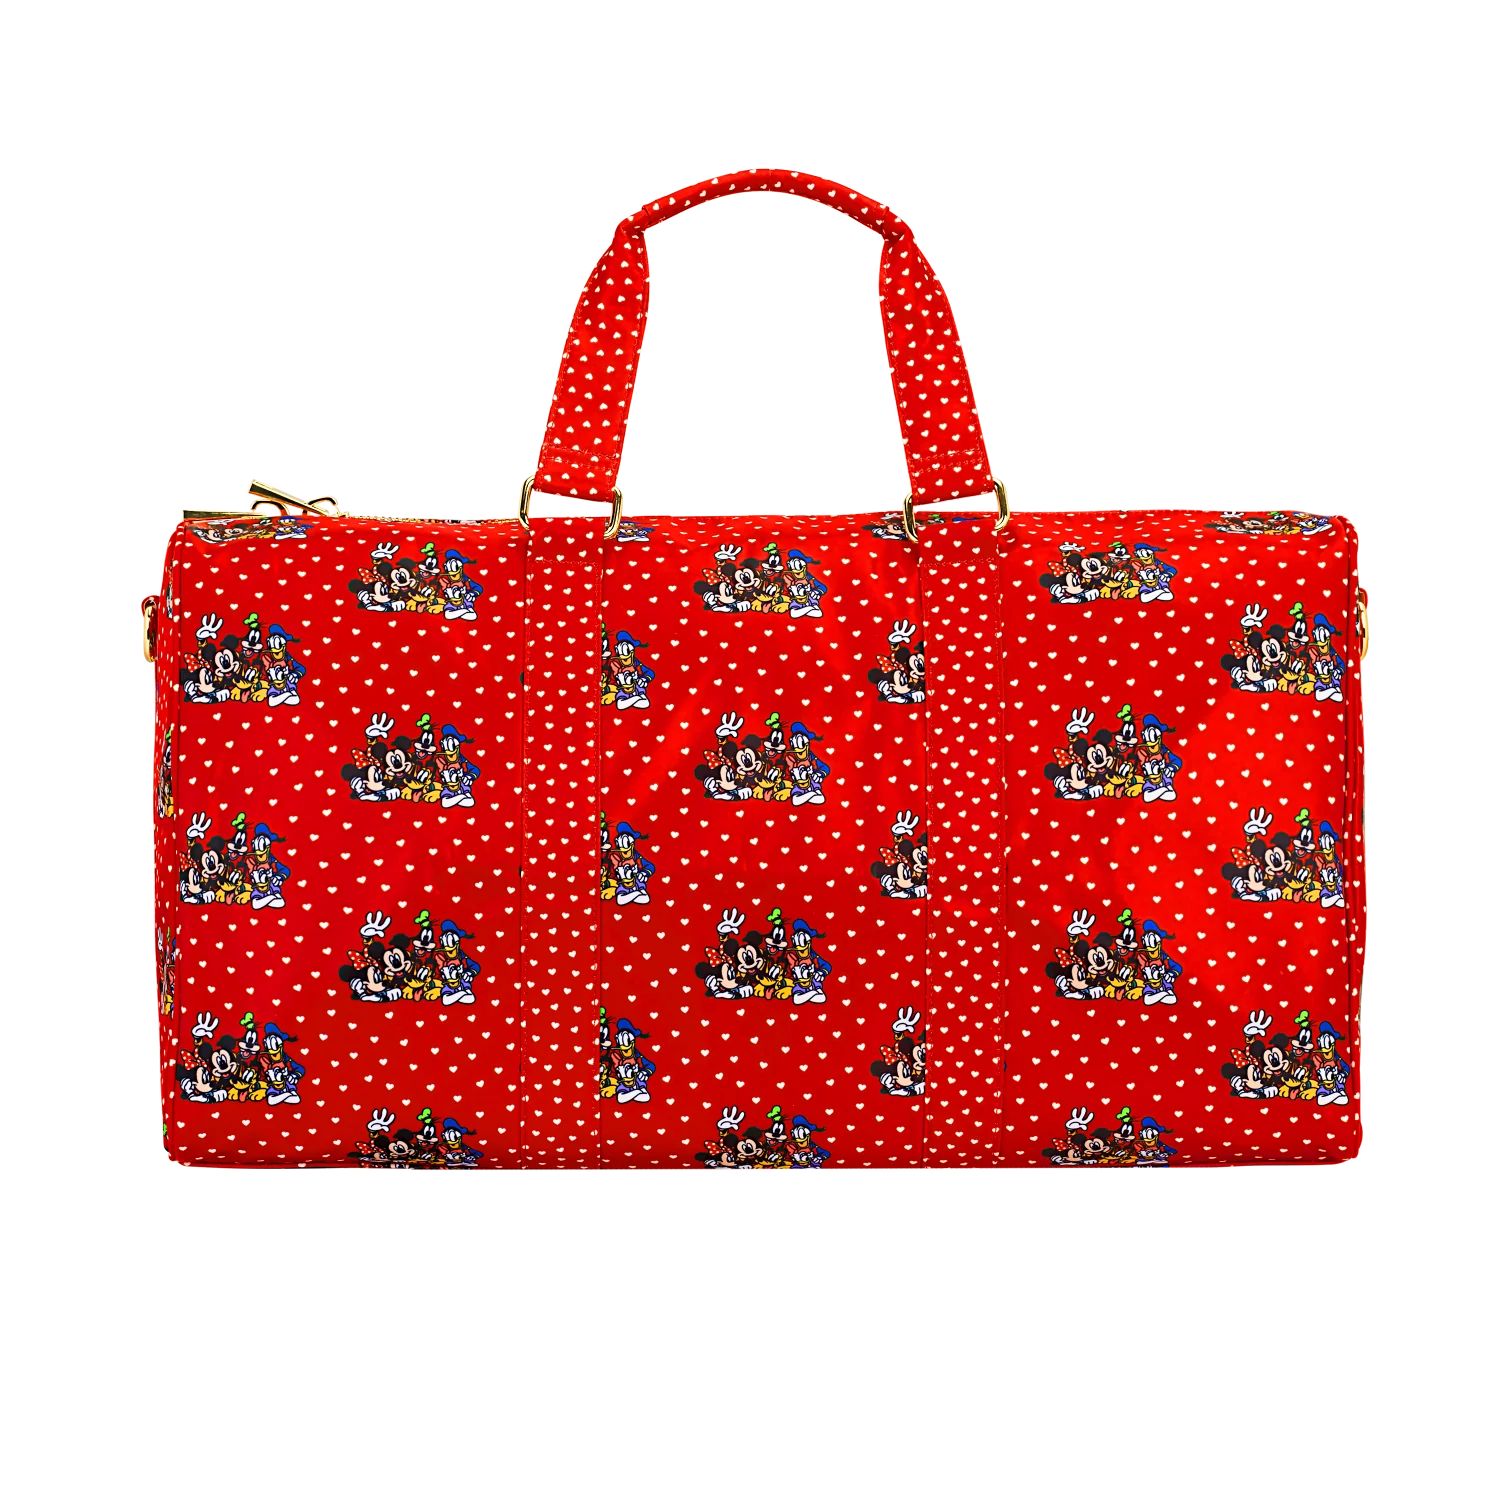 Mickey Mouse Luggage | Disney Travel Bags | Customizable Disney Bags | Stoney Clover Lane